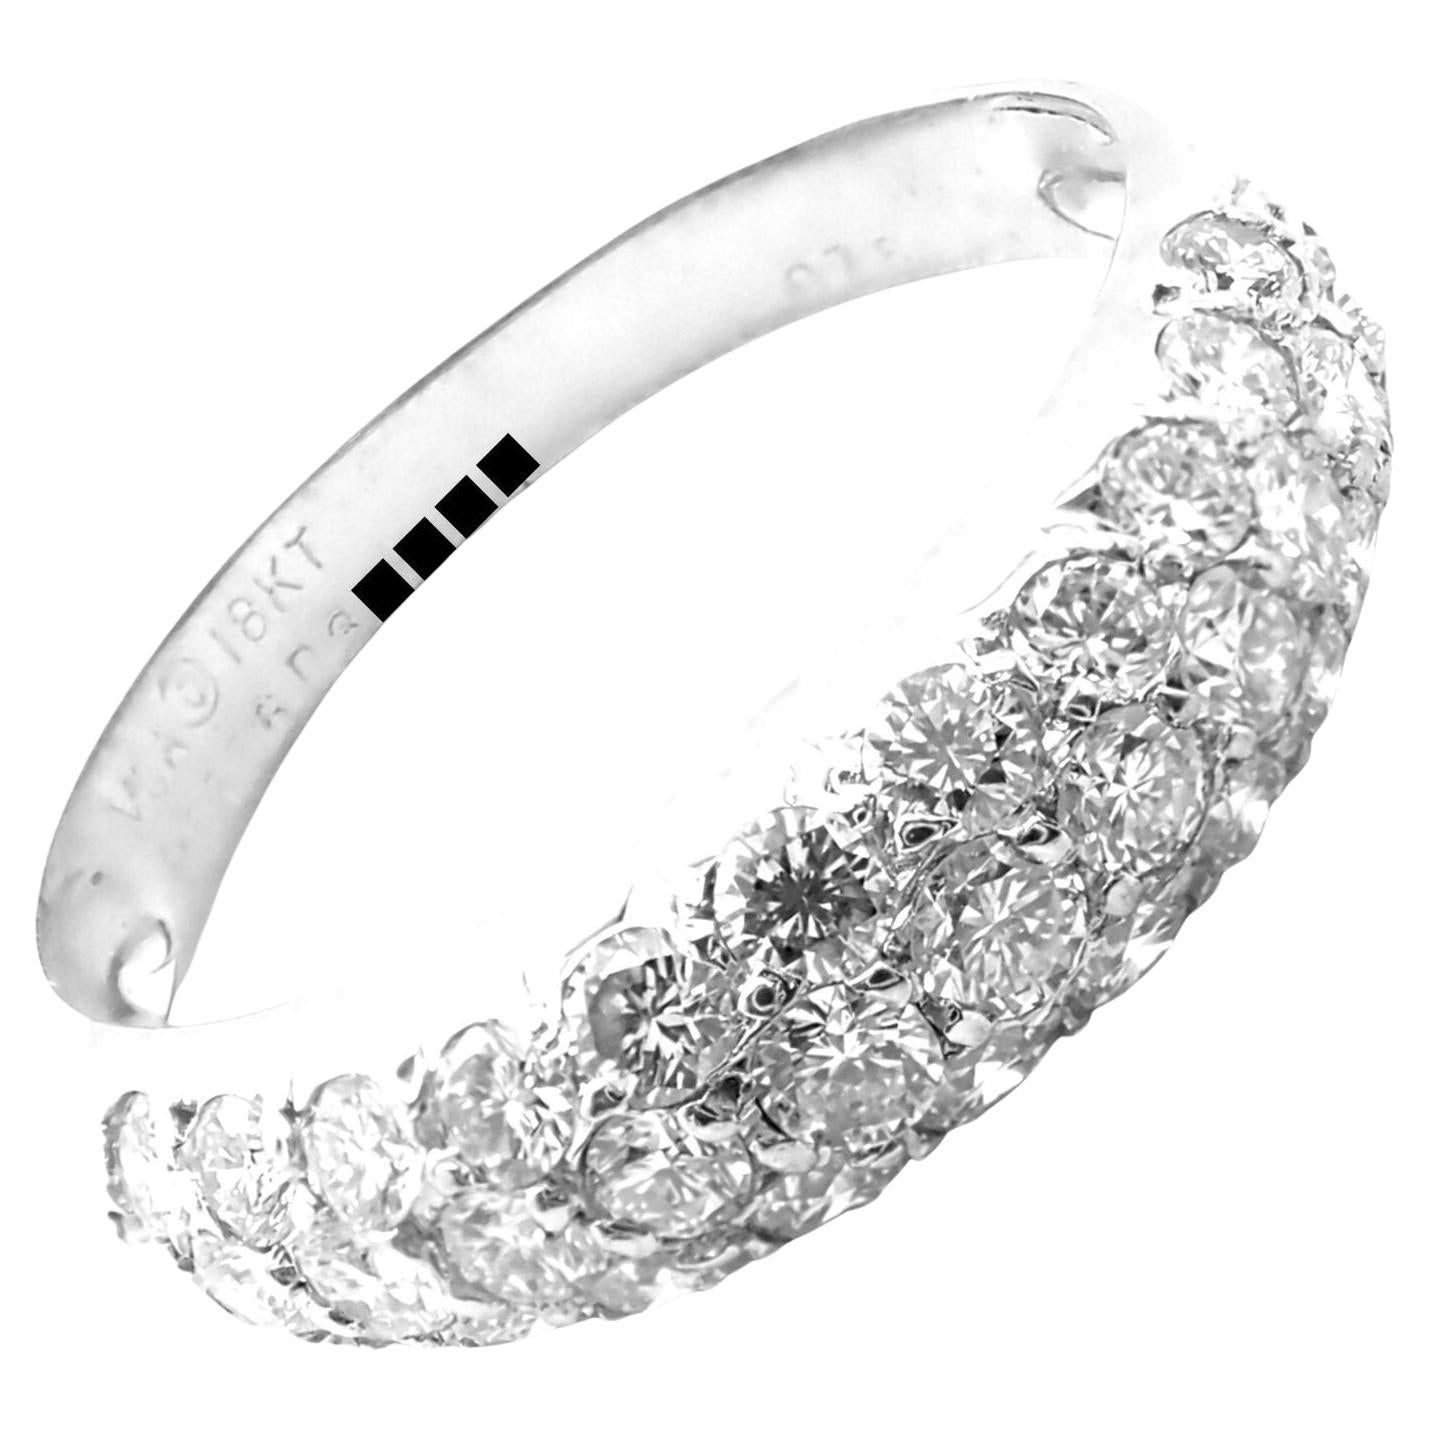 Van Cleef & Arpels Diamond White Gold Band Ring